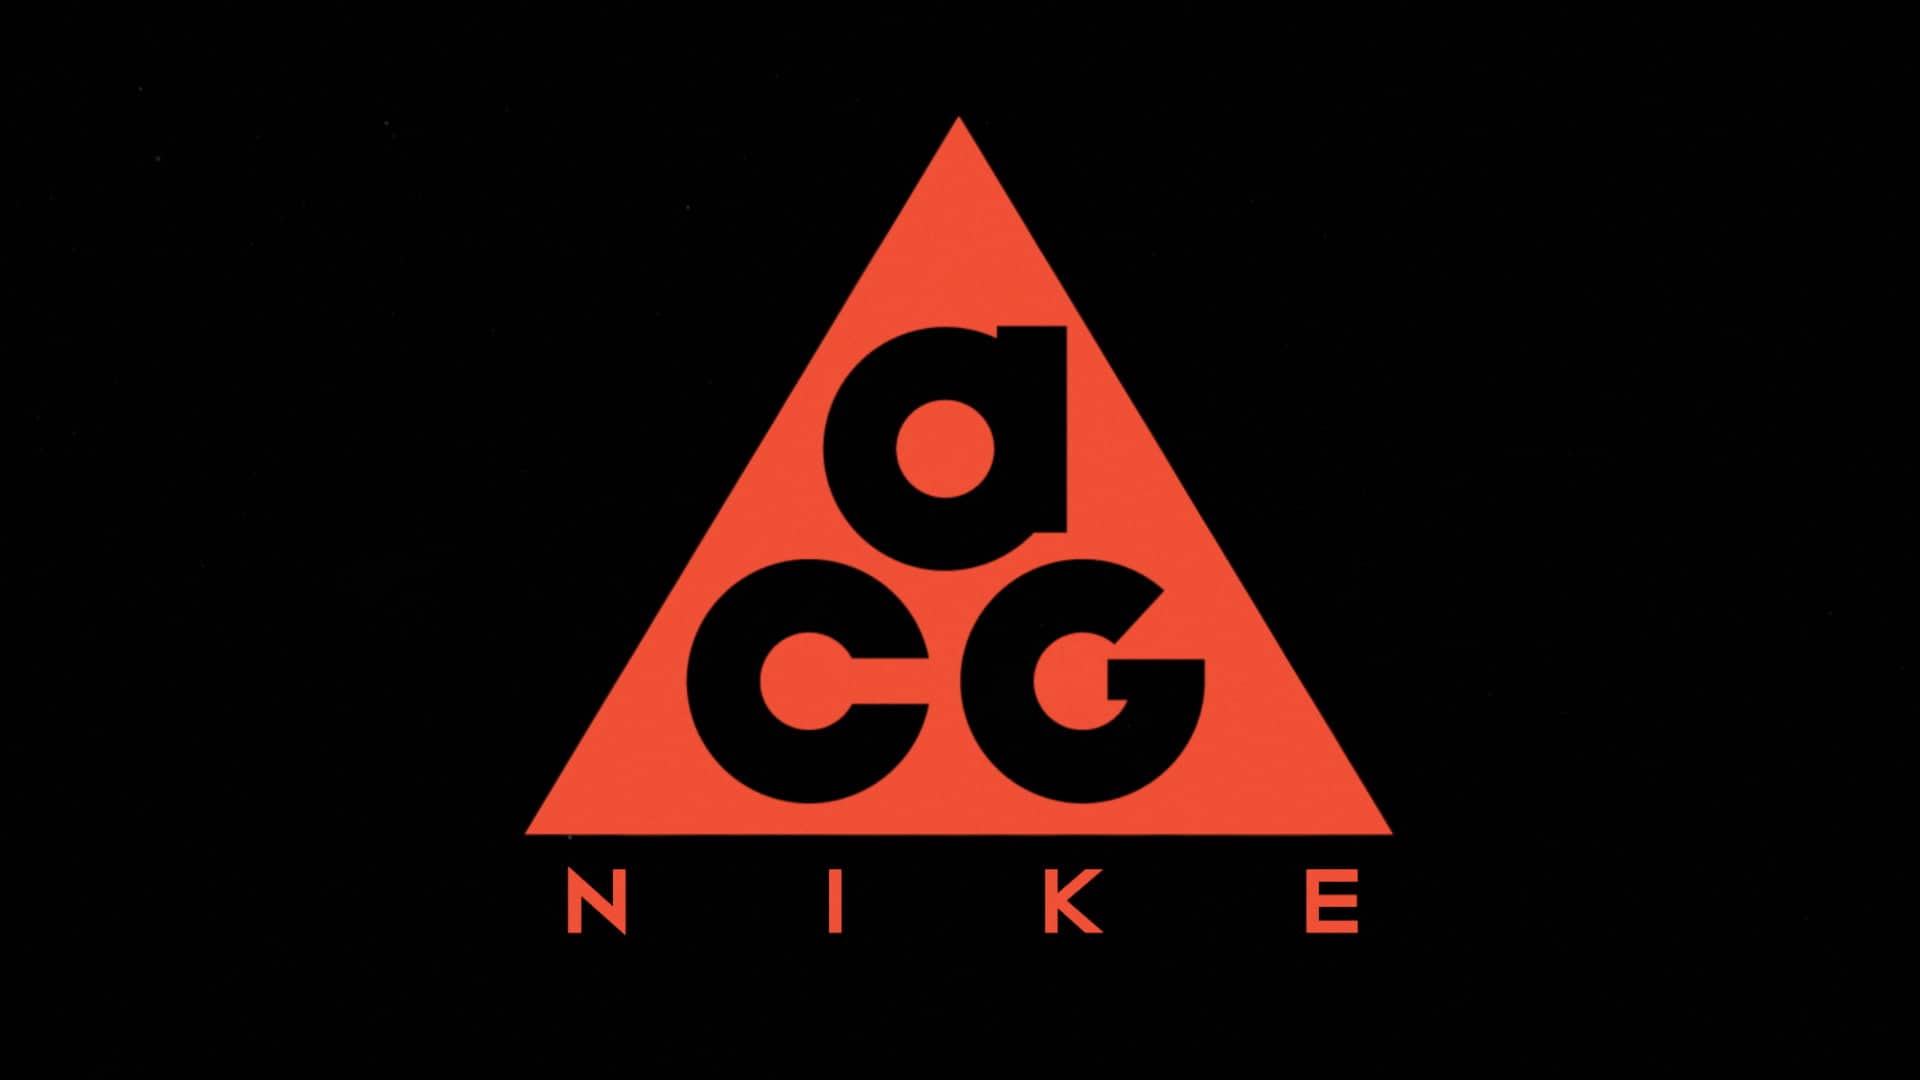 acg brand